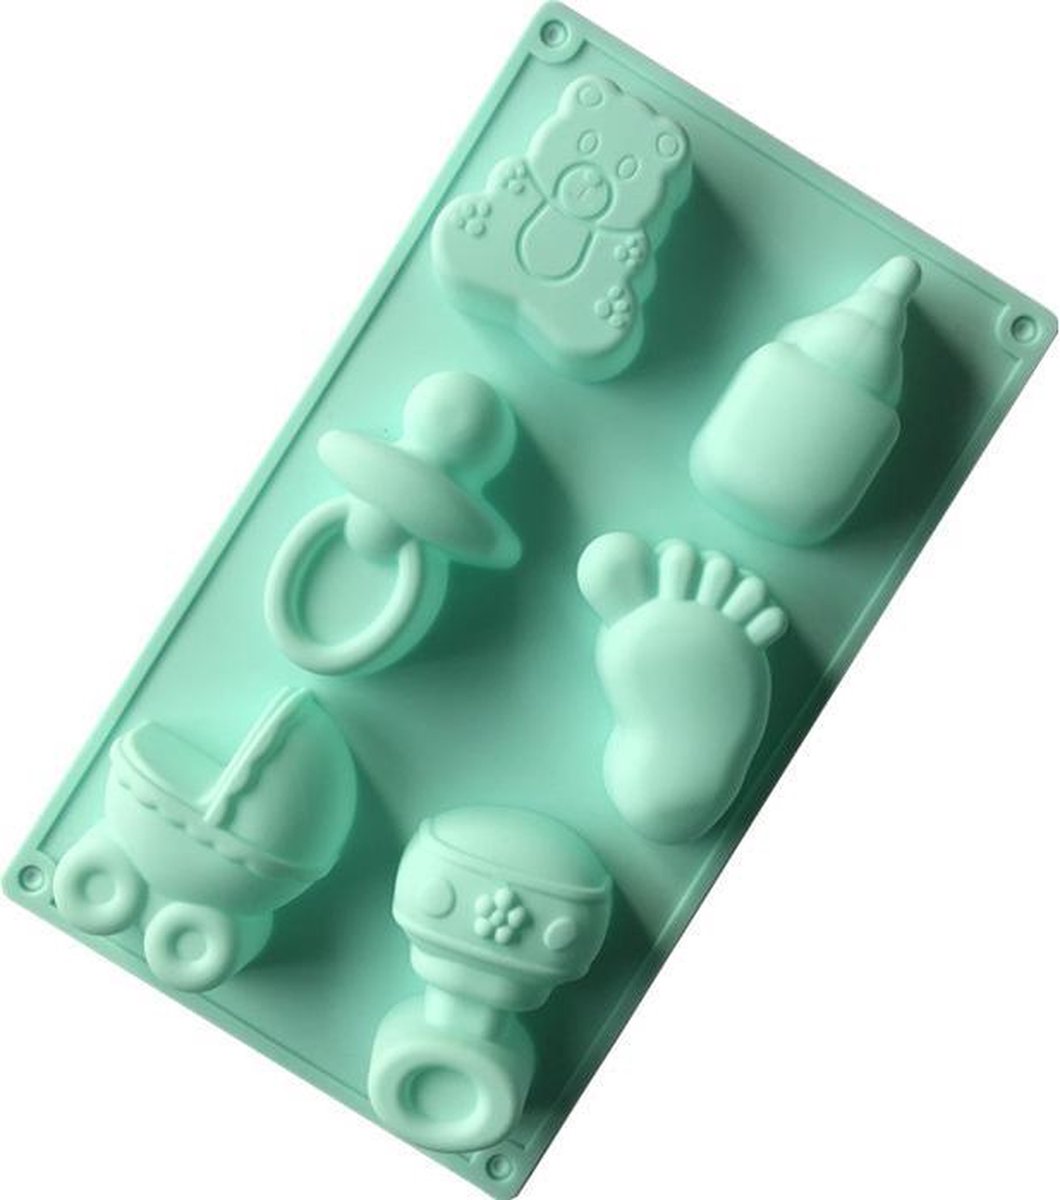 ProductGoods - Siliconen Bakvorm Baby Divers - Vorm Cakevorm Taartvorm Tulband - 6 Stuks - Bakvormen